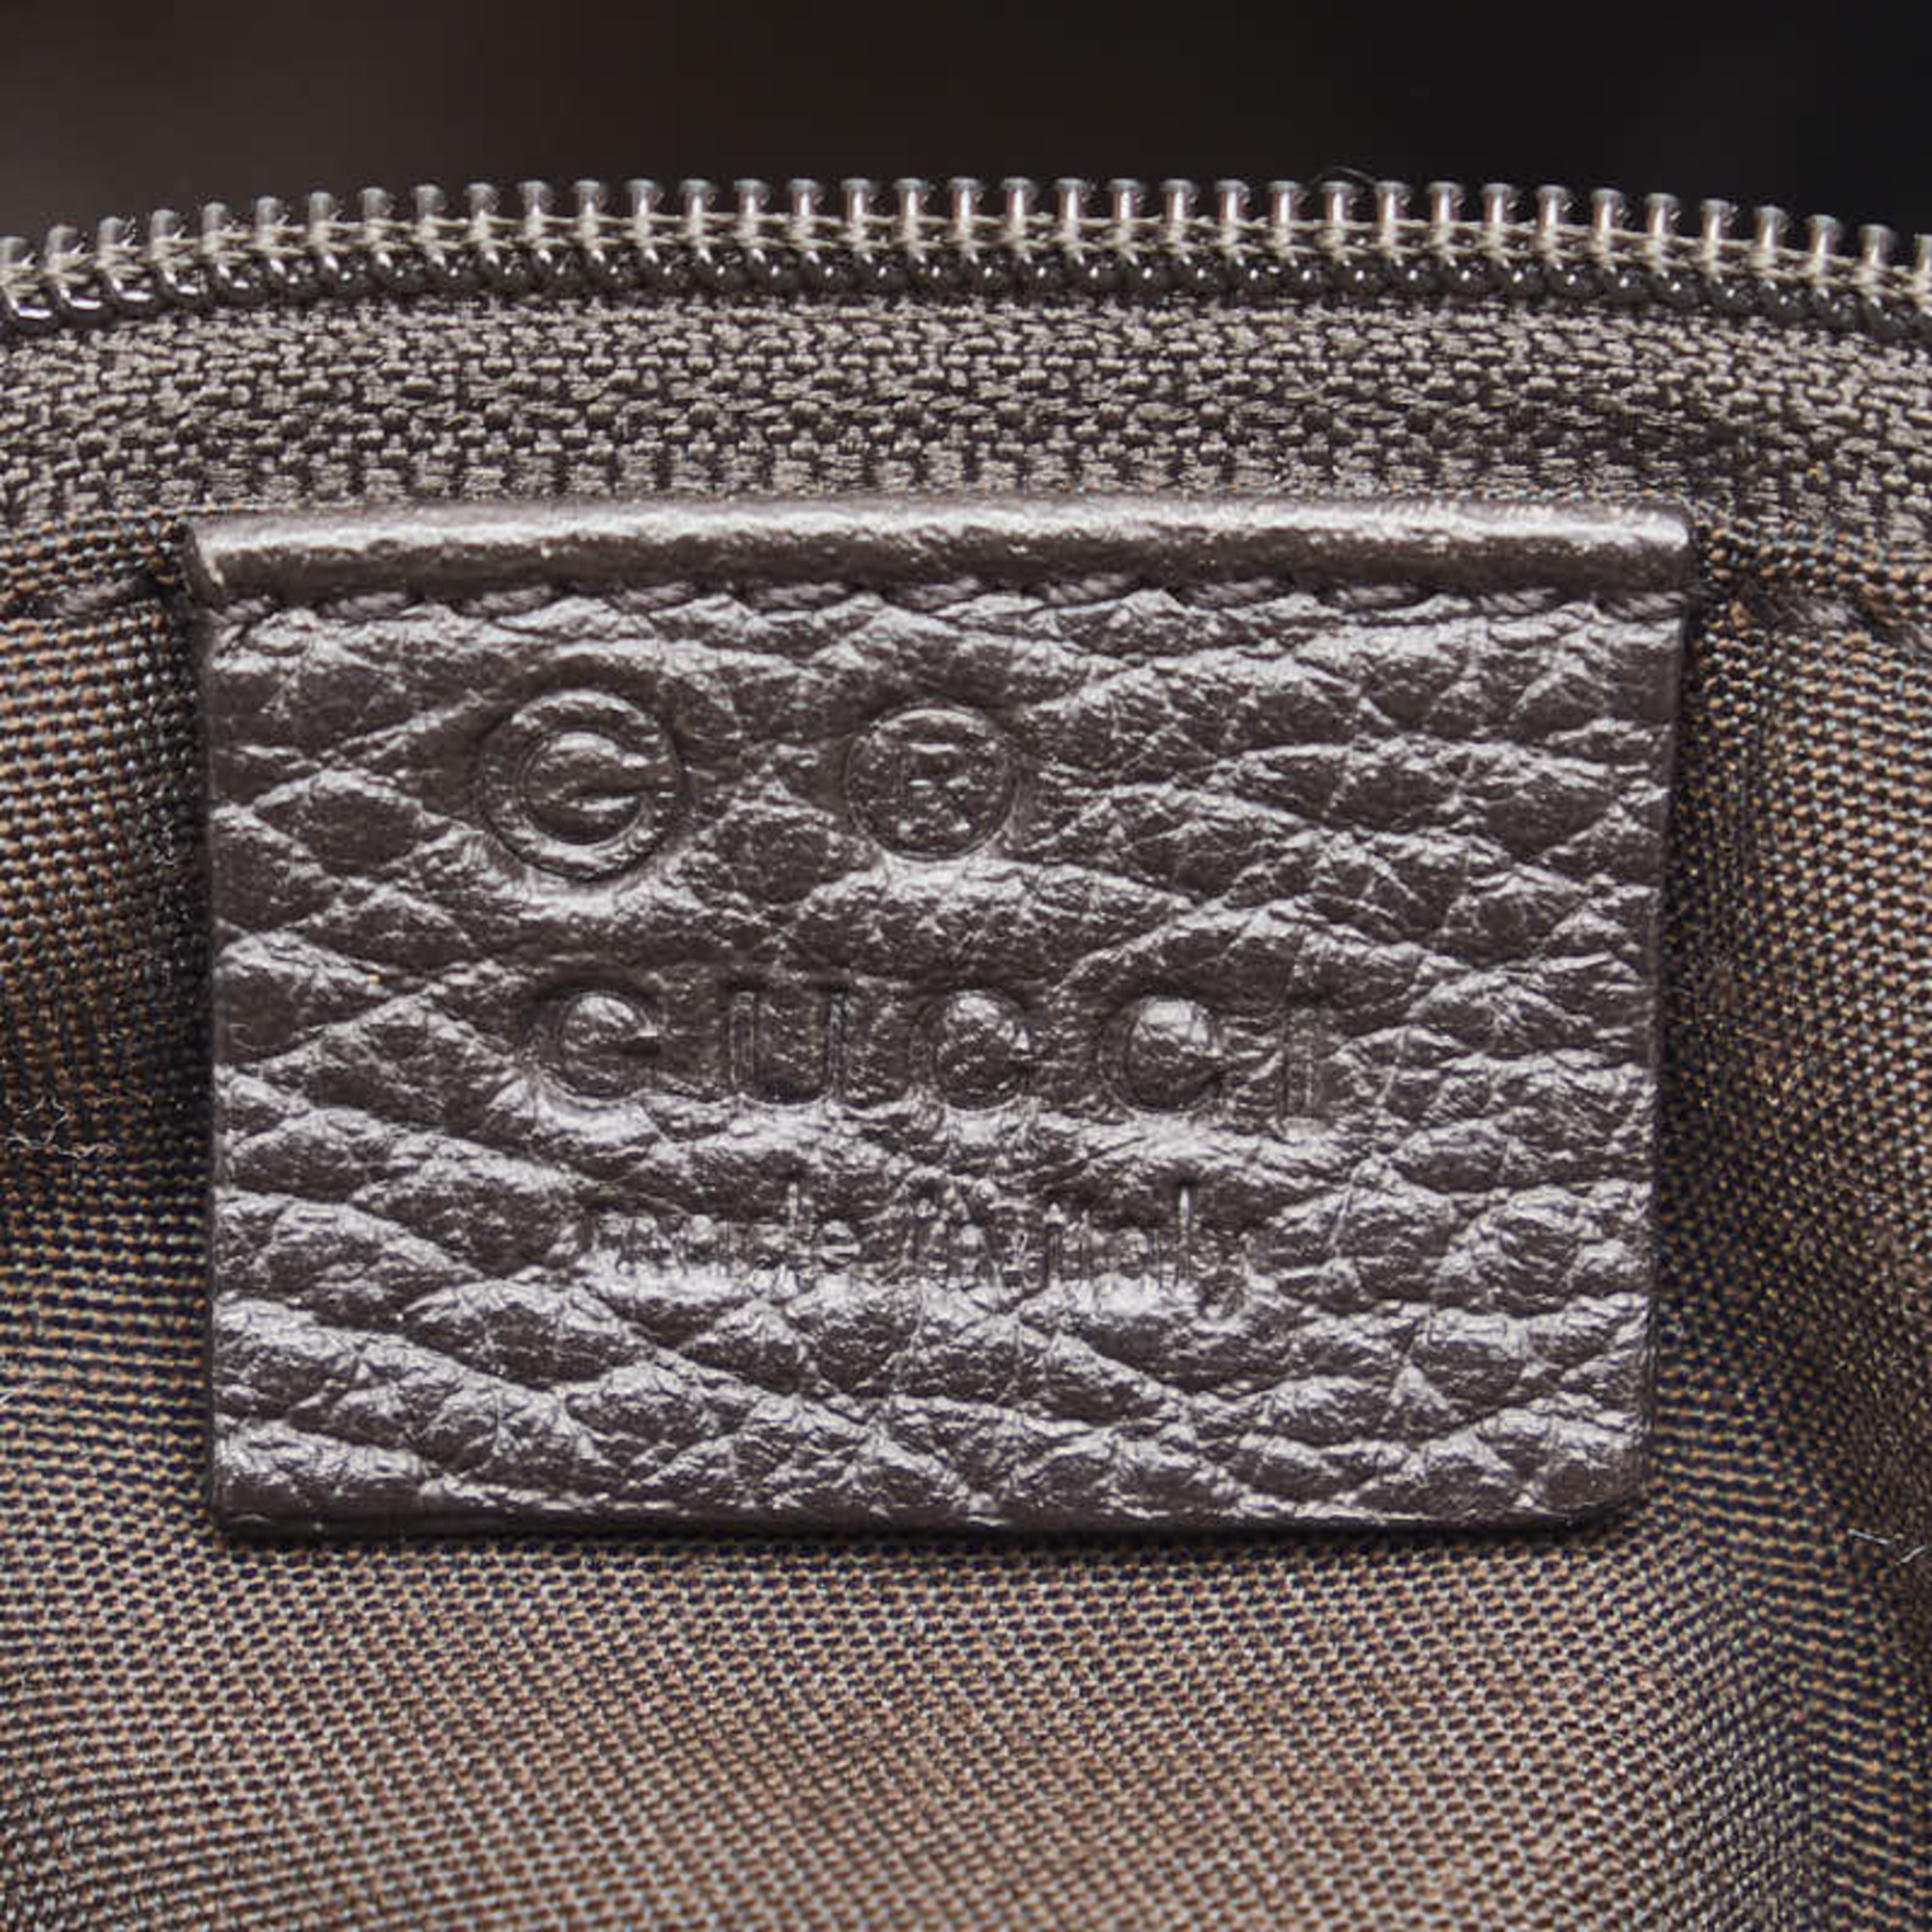 Gucci GG Crystal Bag Handbag 336650 Brown PVC Leather Women's GUCCI